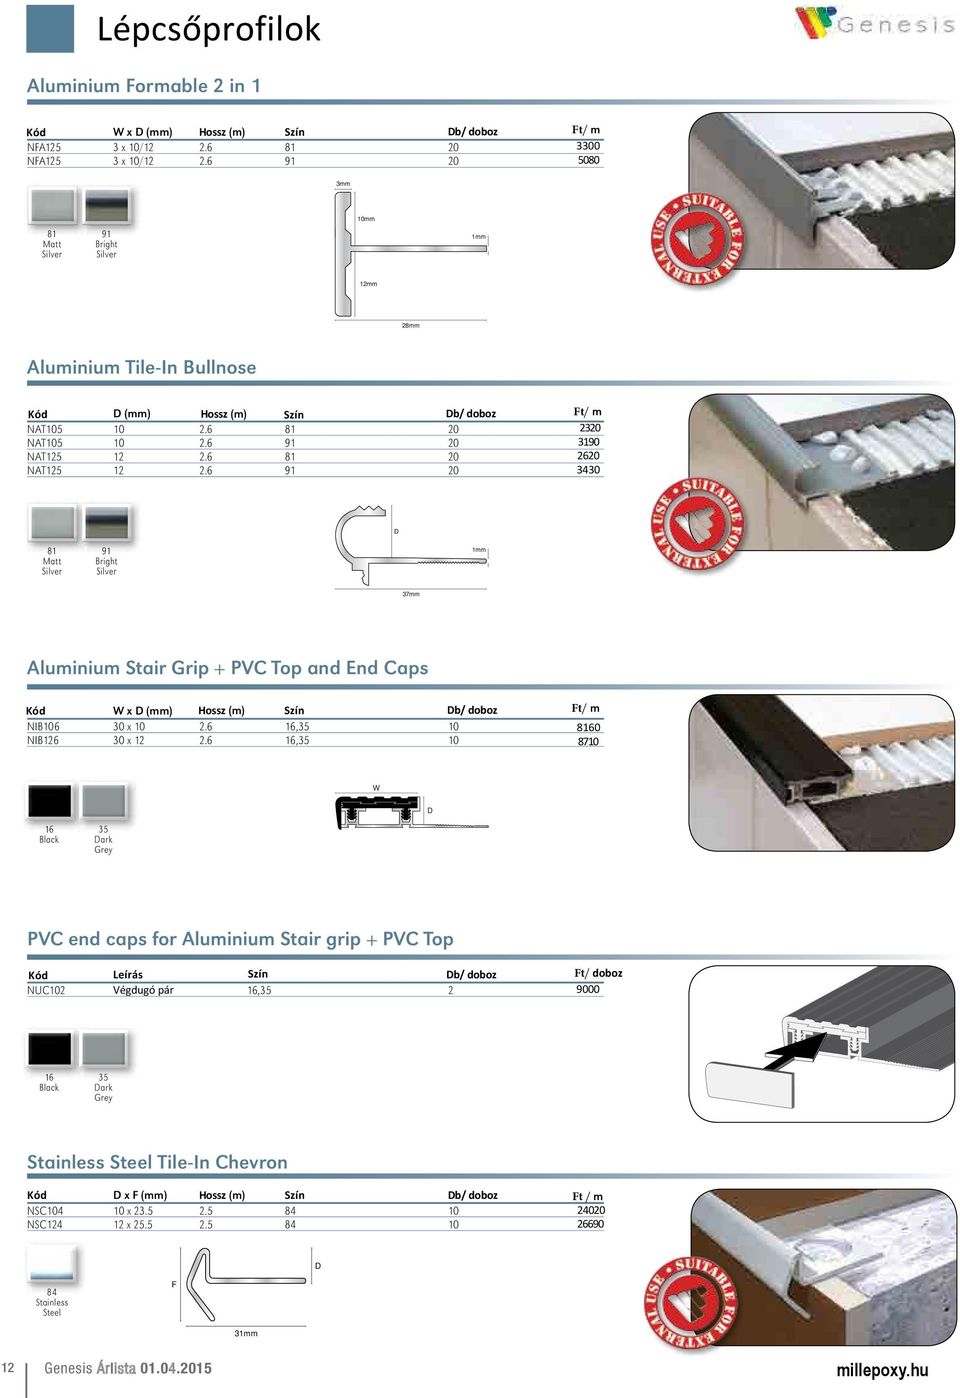 6 20 3430 1mm 37mm Aluminium Stair Grip + PVC Top and End Caps Kód x (mm) Hossz (m) Szín b/ doboz Ft/ m NIB106 30 x 10 2.6,35 10 60 NIB126 30 x 12 2.